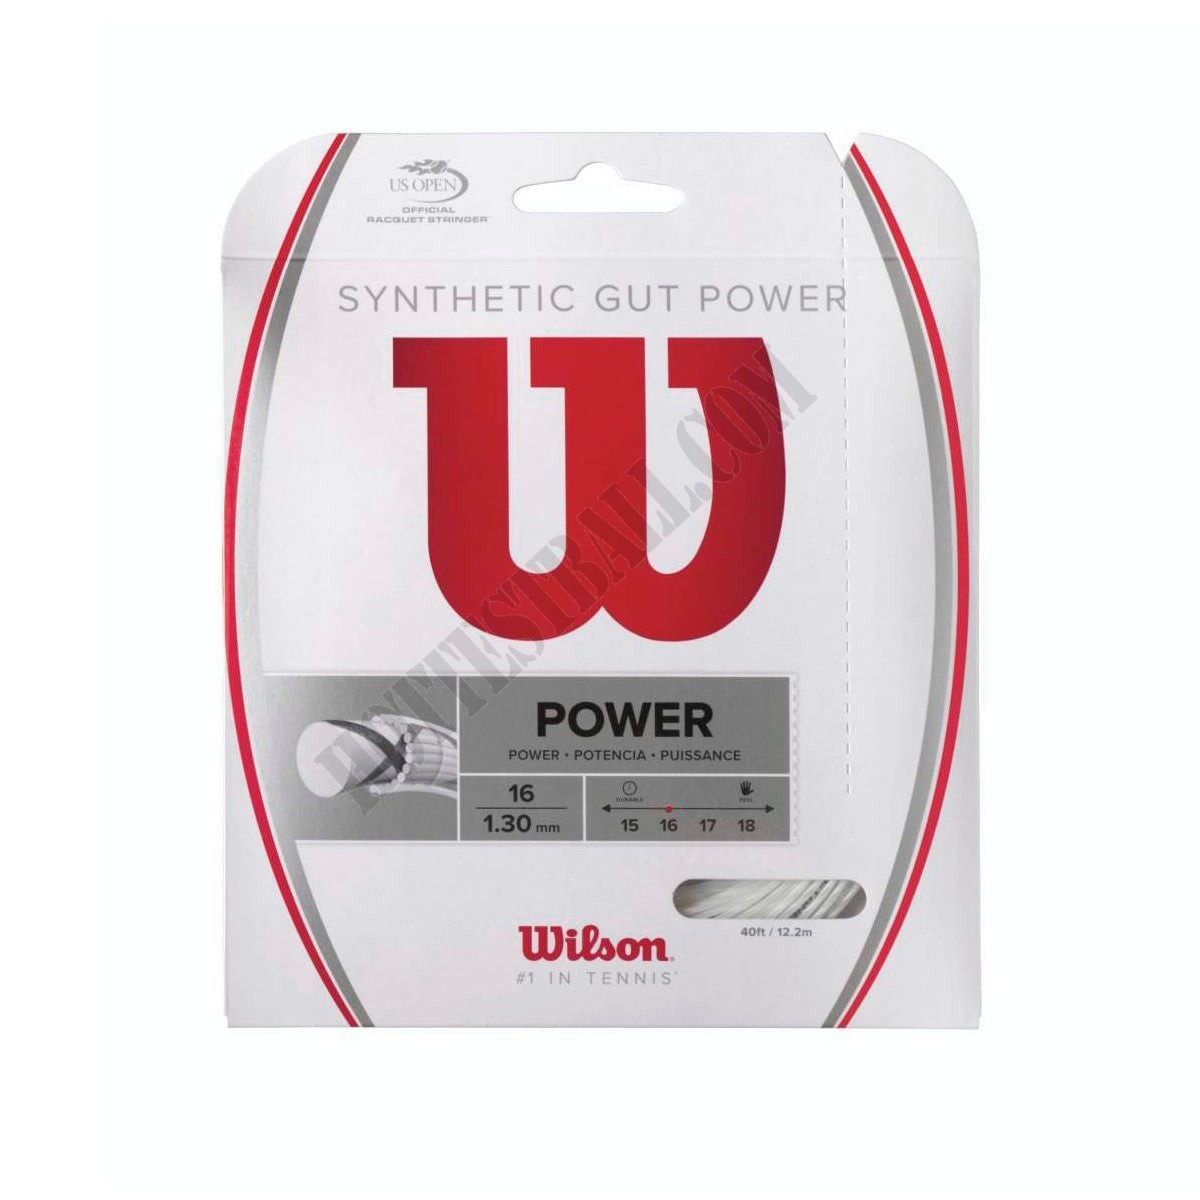 Synthetic Gut Power Tennis String - Set - Wilson Discount Store - Synthetic Gut Power Tennis String - Set - Wilson Discount Store